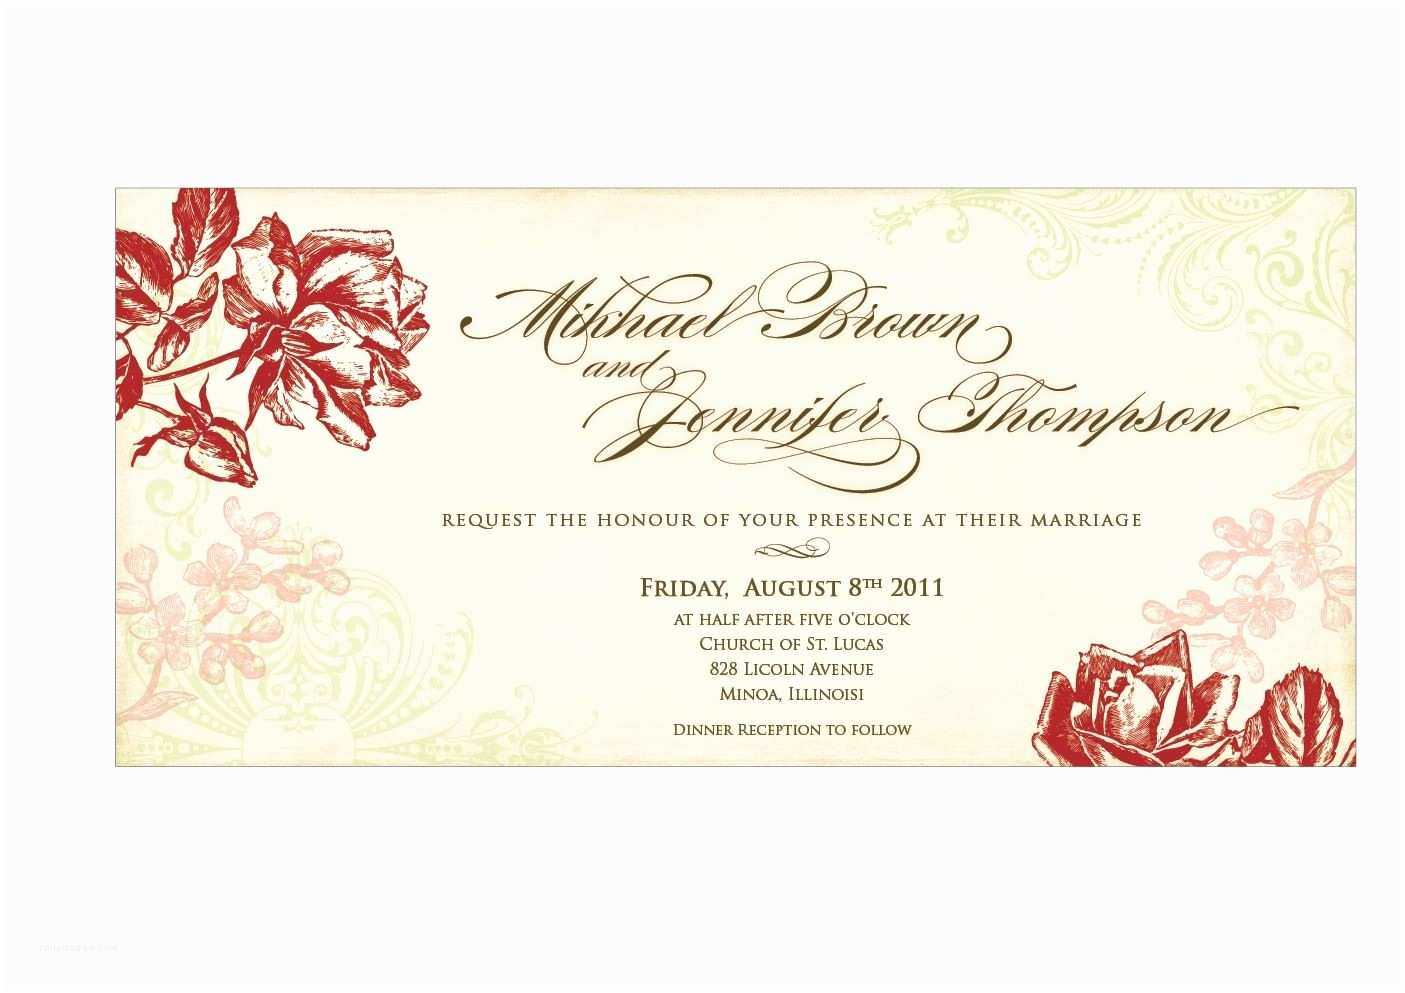 Wedding Invitation Design Images Wedding Invitations Designs For Sample Wedding Invitation Cards Templates